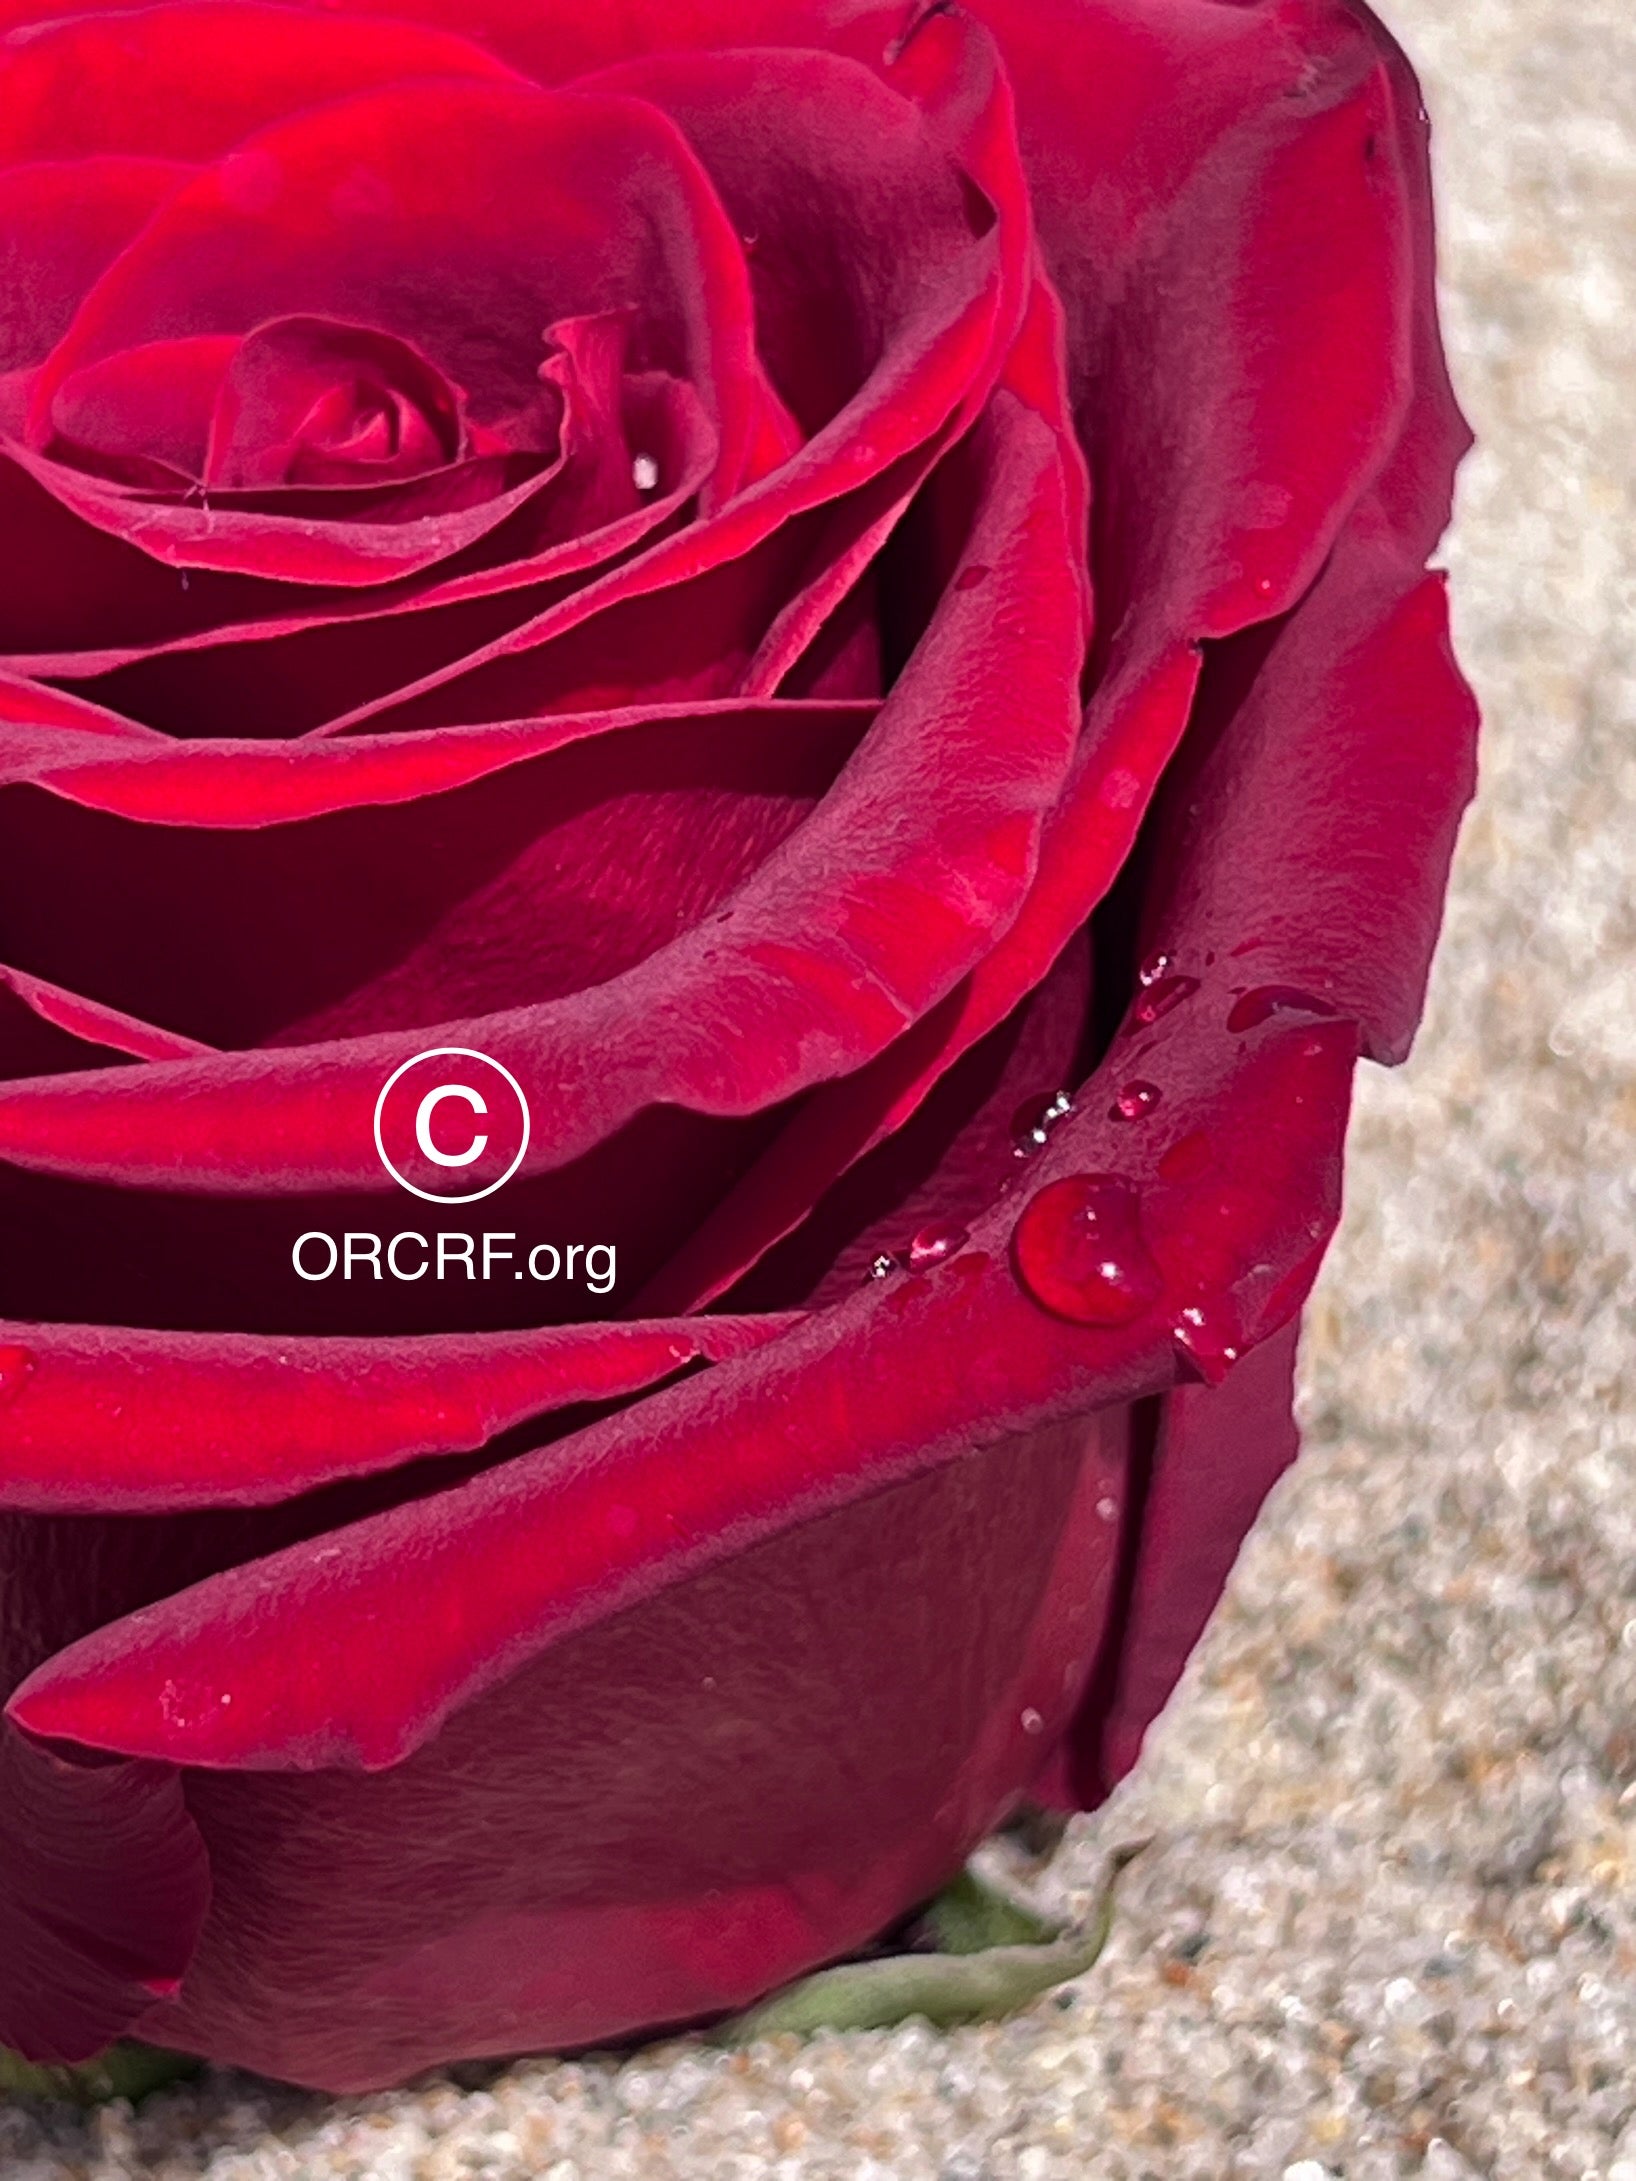 ORCRF ROSE / NFT Digital Art Image 3952 - Image Award Winning Photography by JARVIS Creative & Media Studios